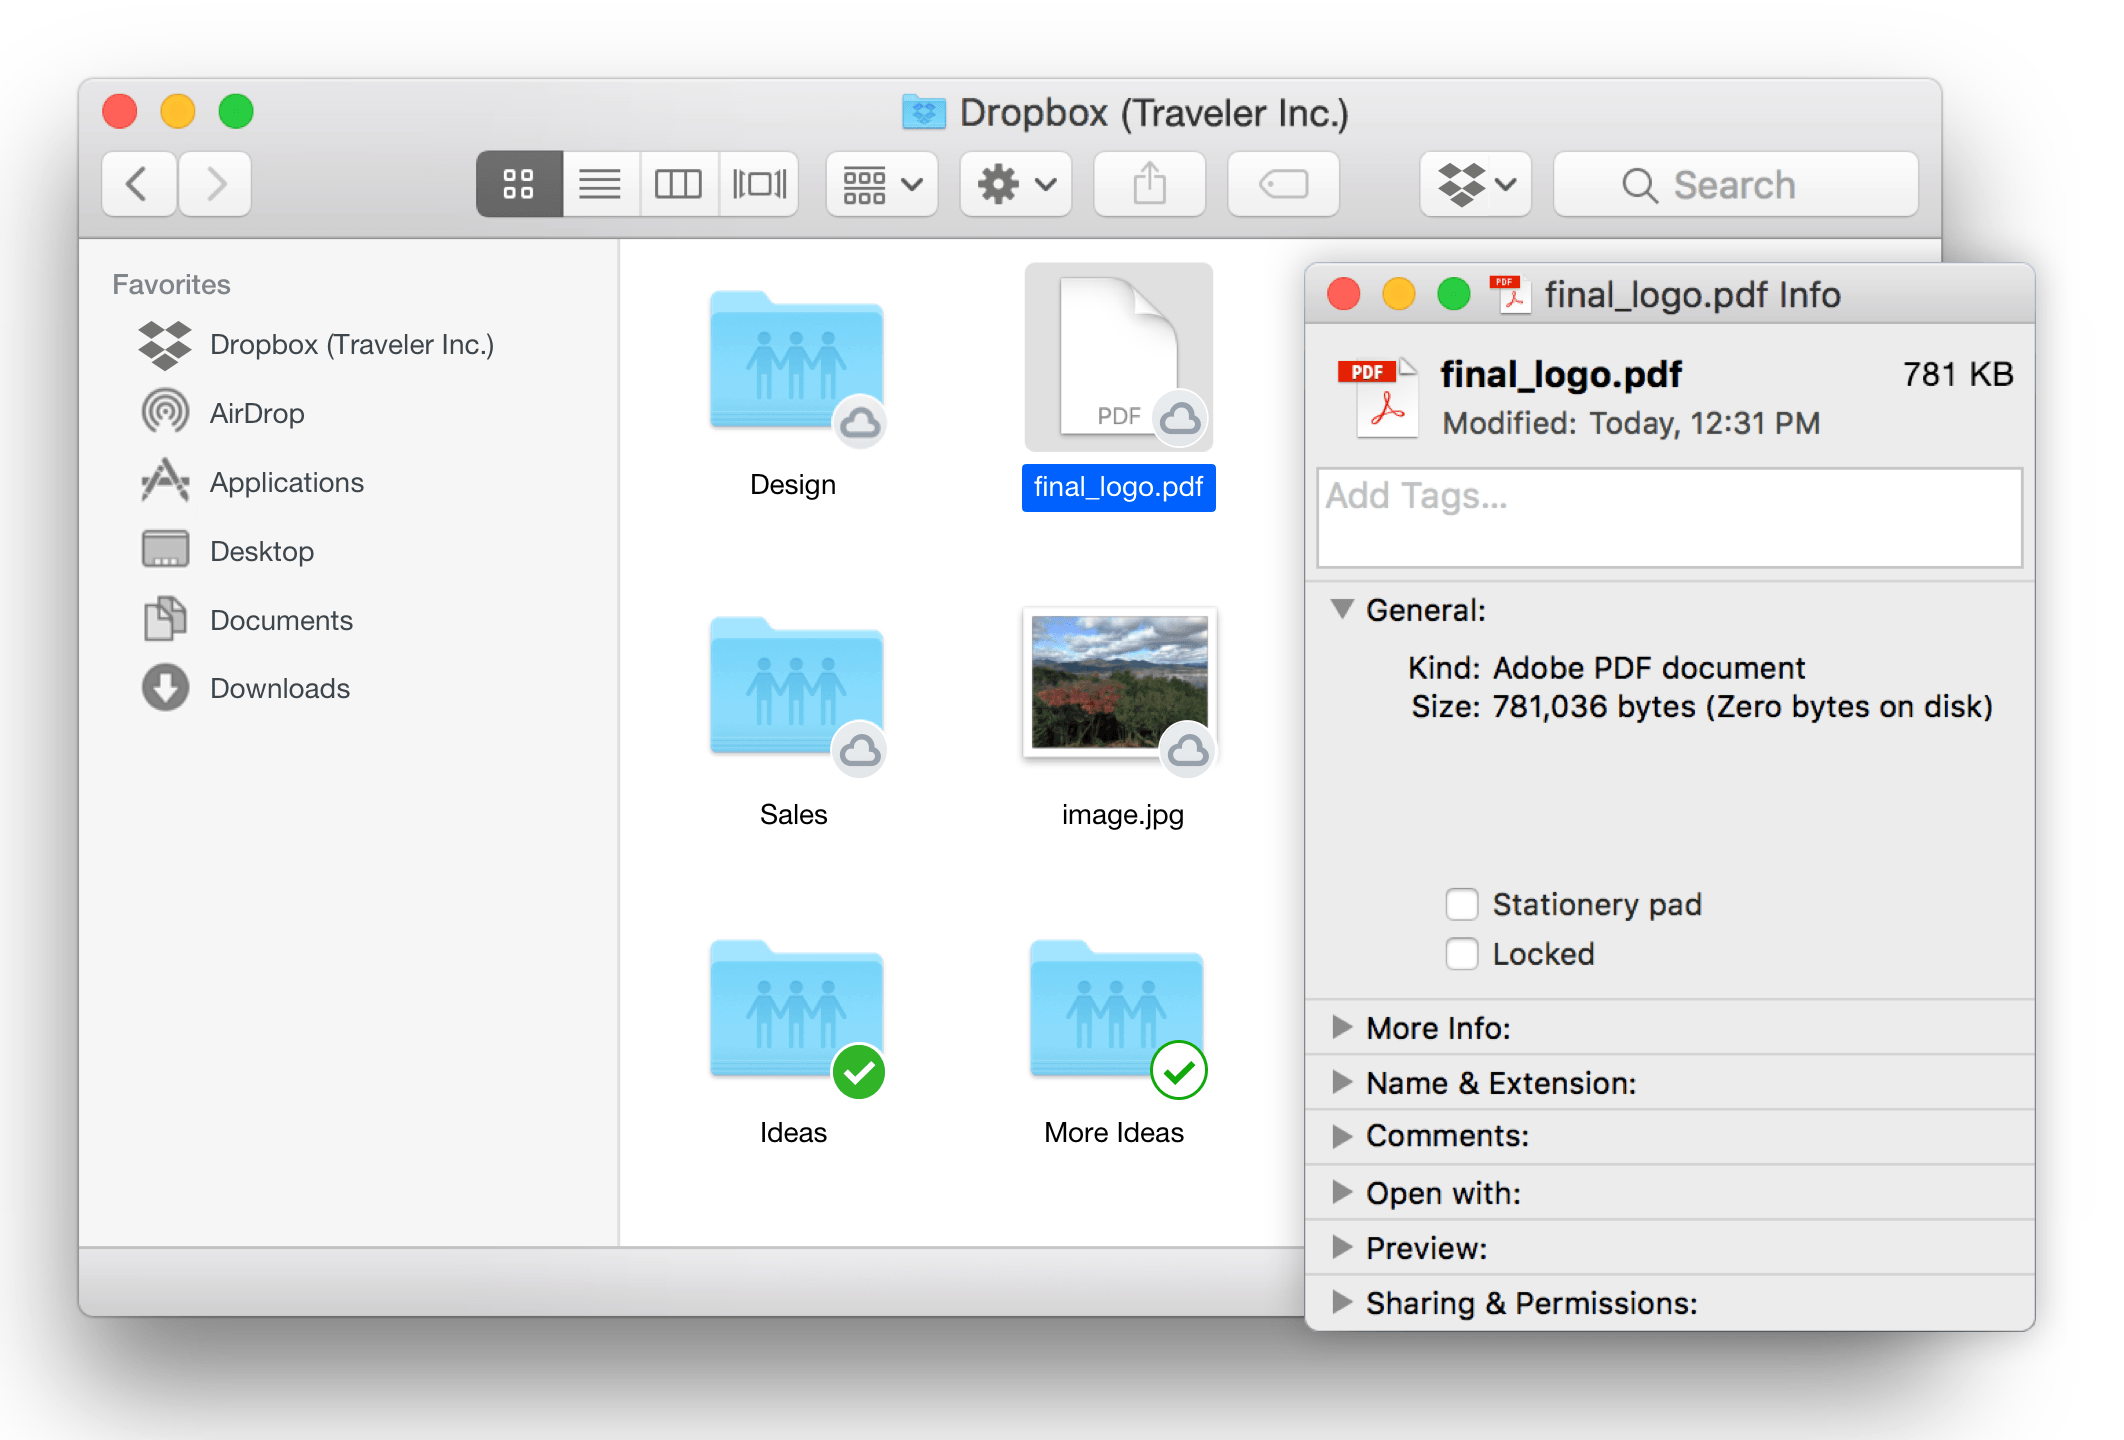 Dropbox integration with Mac desktop